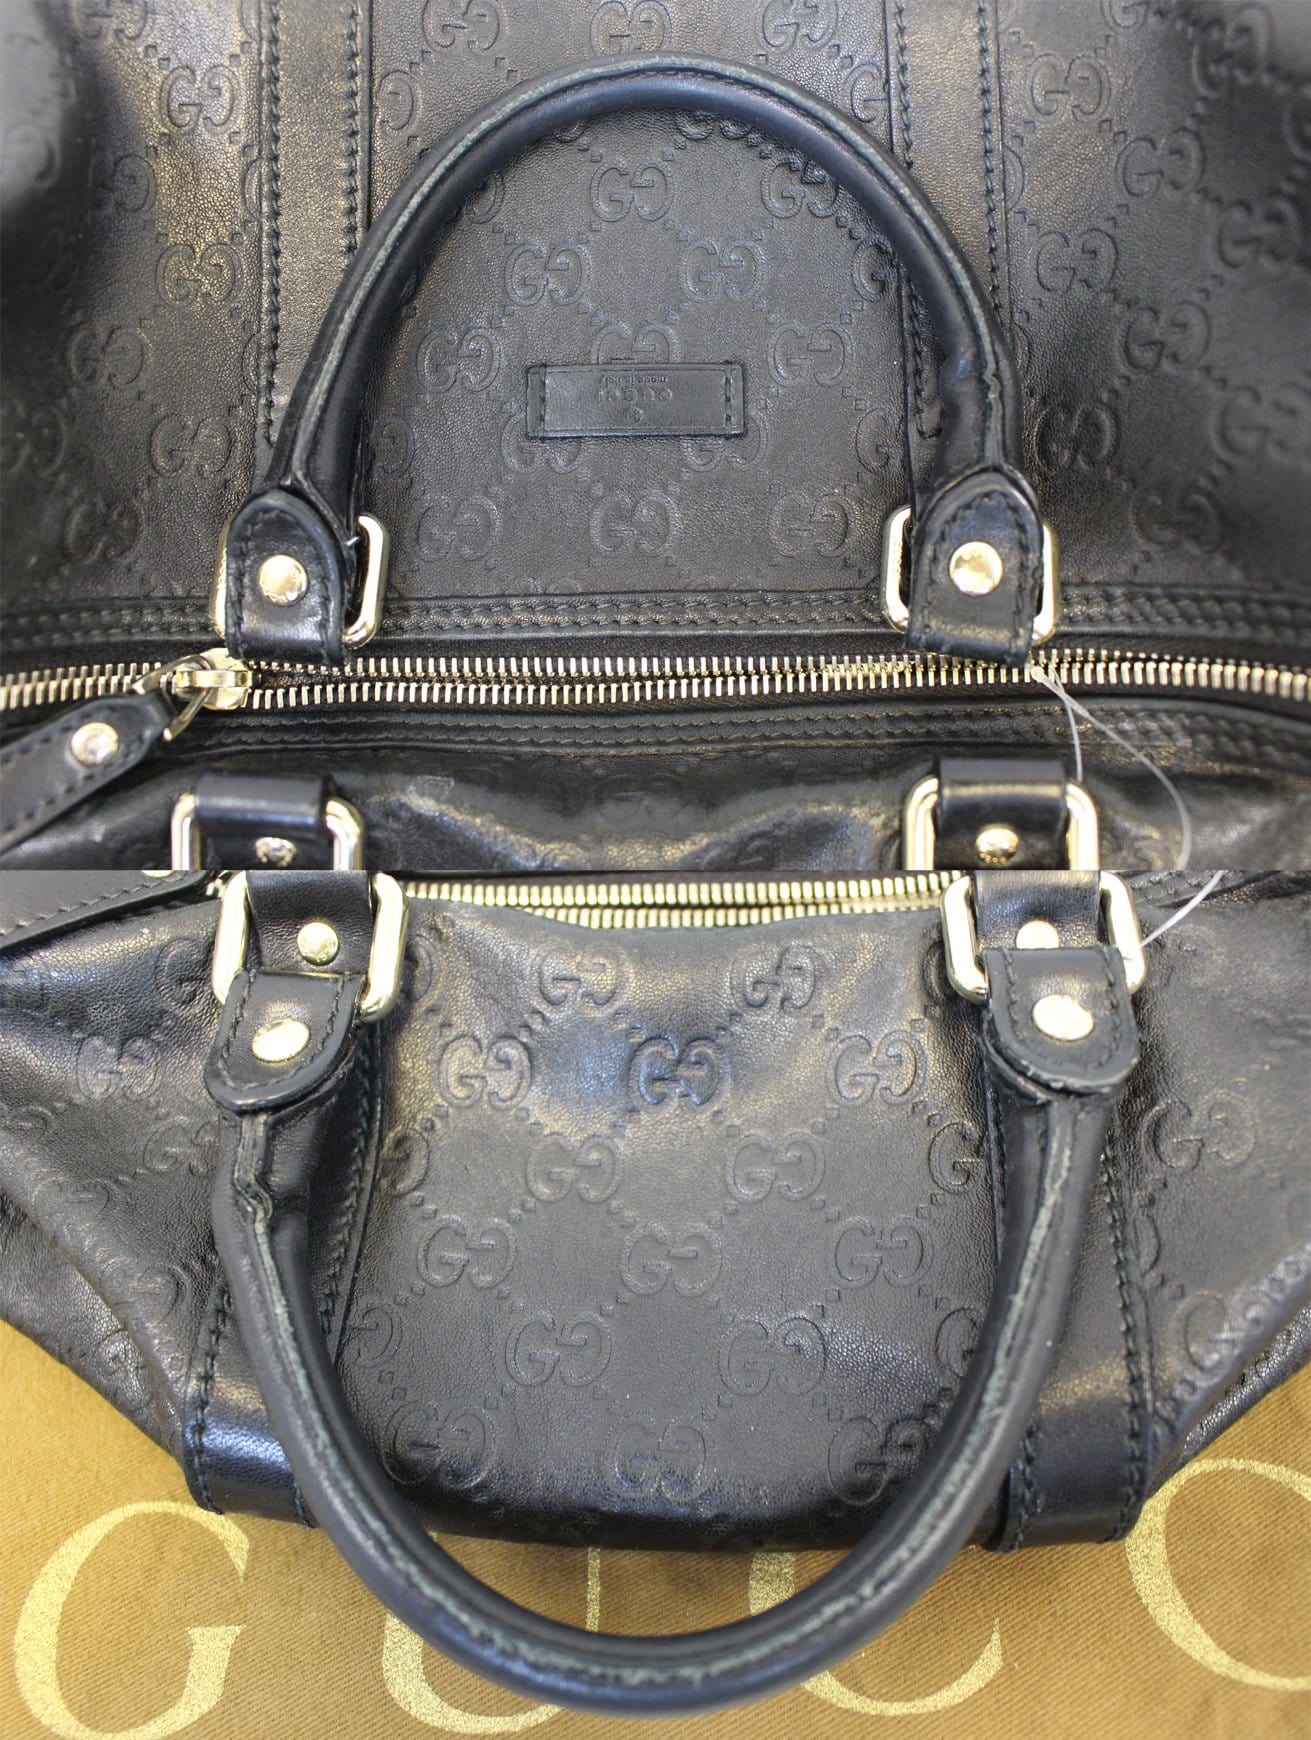 Gucci Dog Bag – Beccas Bags